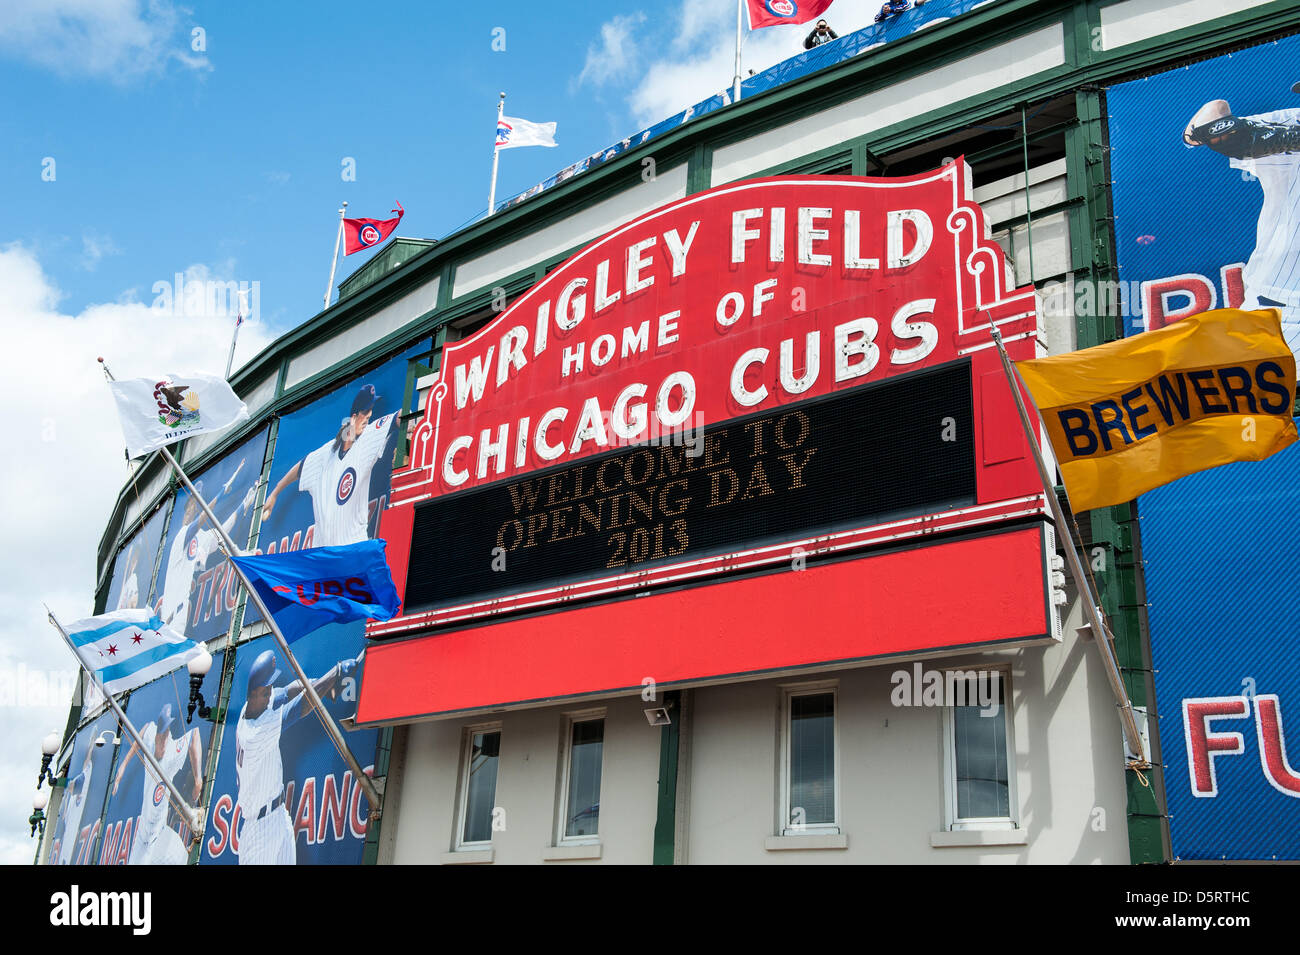 Chicago, Estados Unidos. 8 de abril de 2013. Chicago Cubs fans se reúnen en el Wrigley Field en Chicago para el 2013 Major League Baseball home abridor. Crédito: Max Herman/Alamy Live News Foto de stock